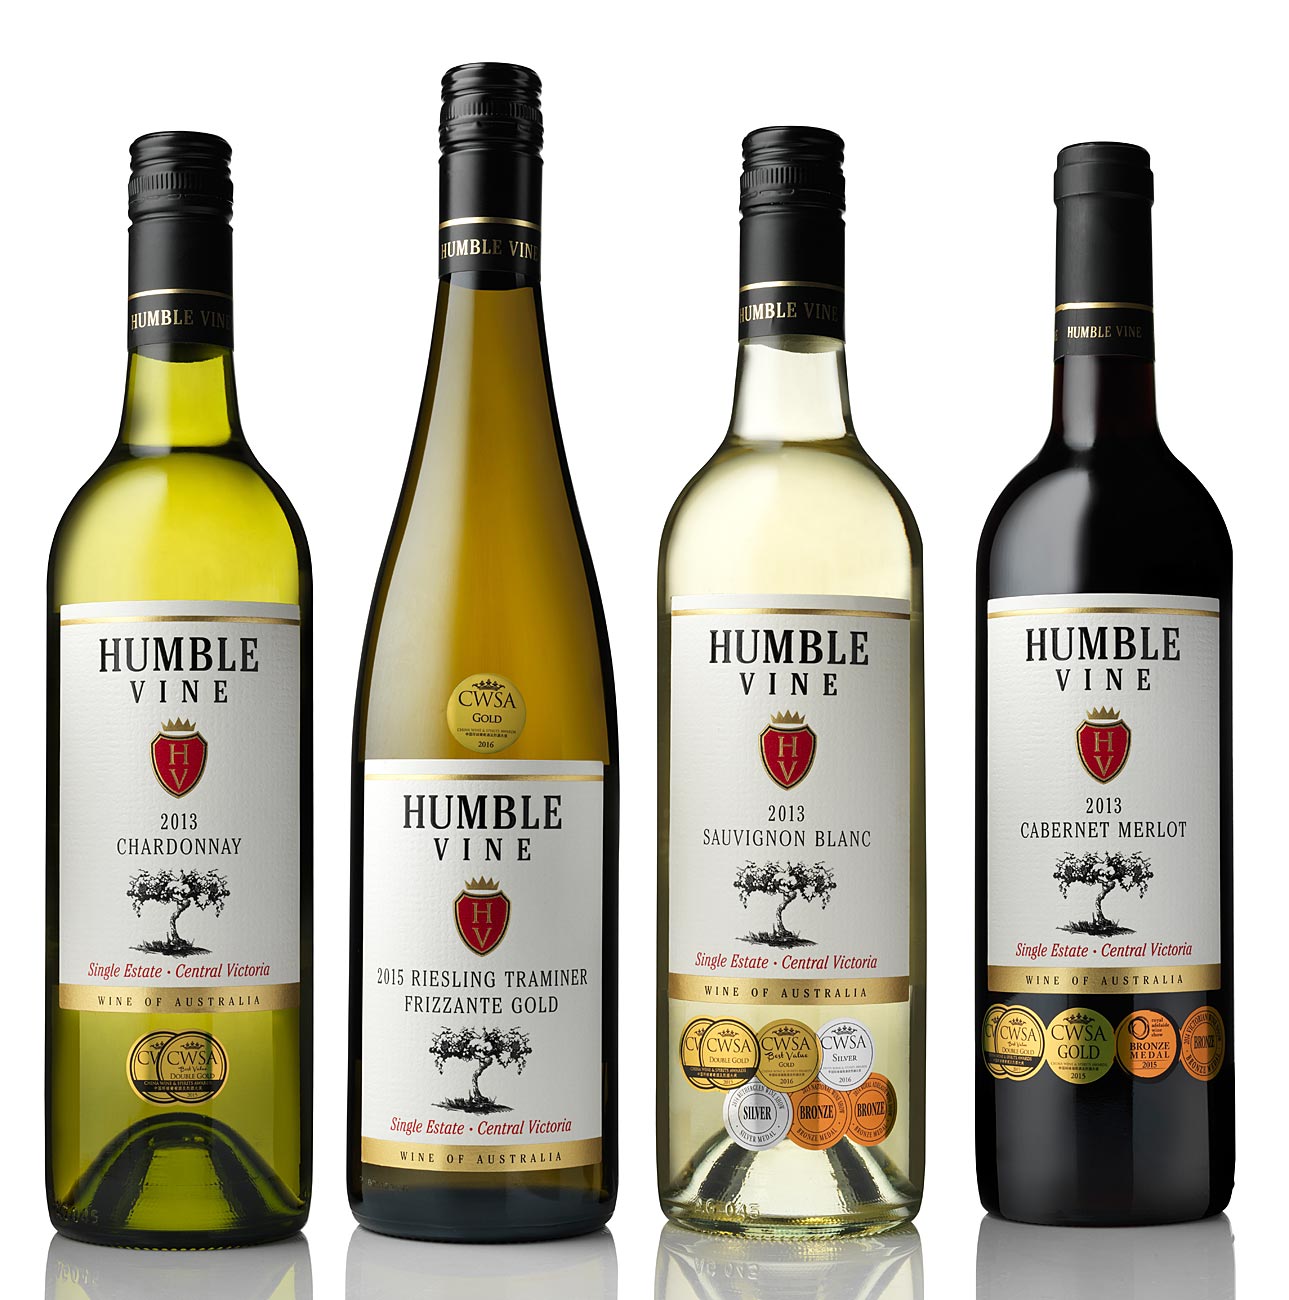 HumbleVine-wine-bottle-photography1.jpg